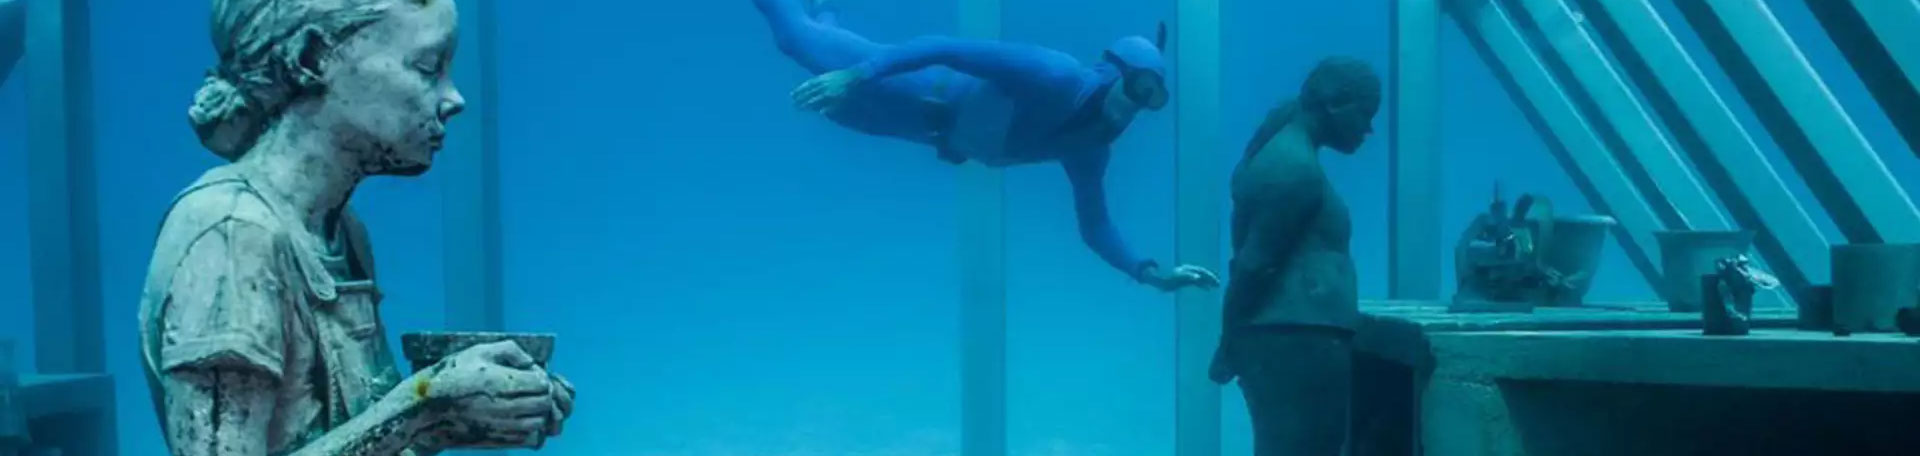 Museum of Underwater Art